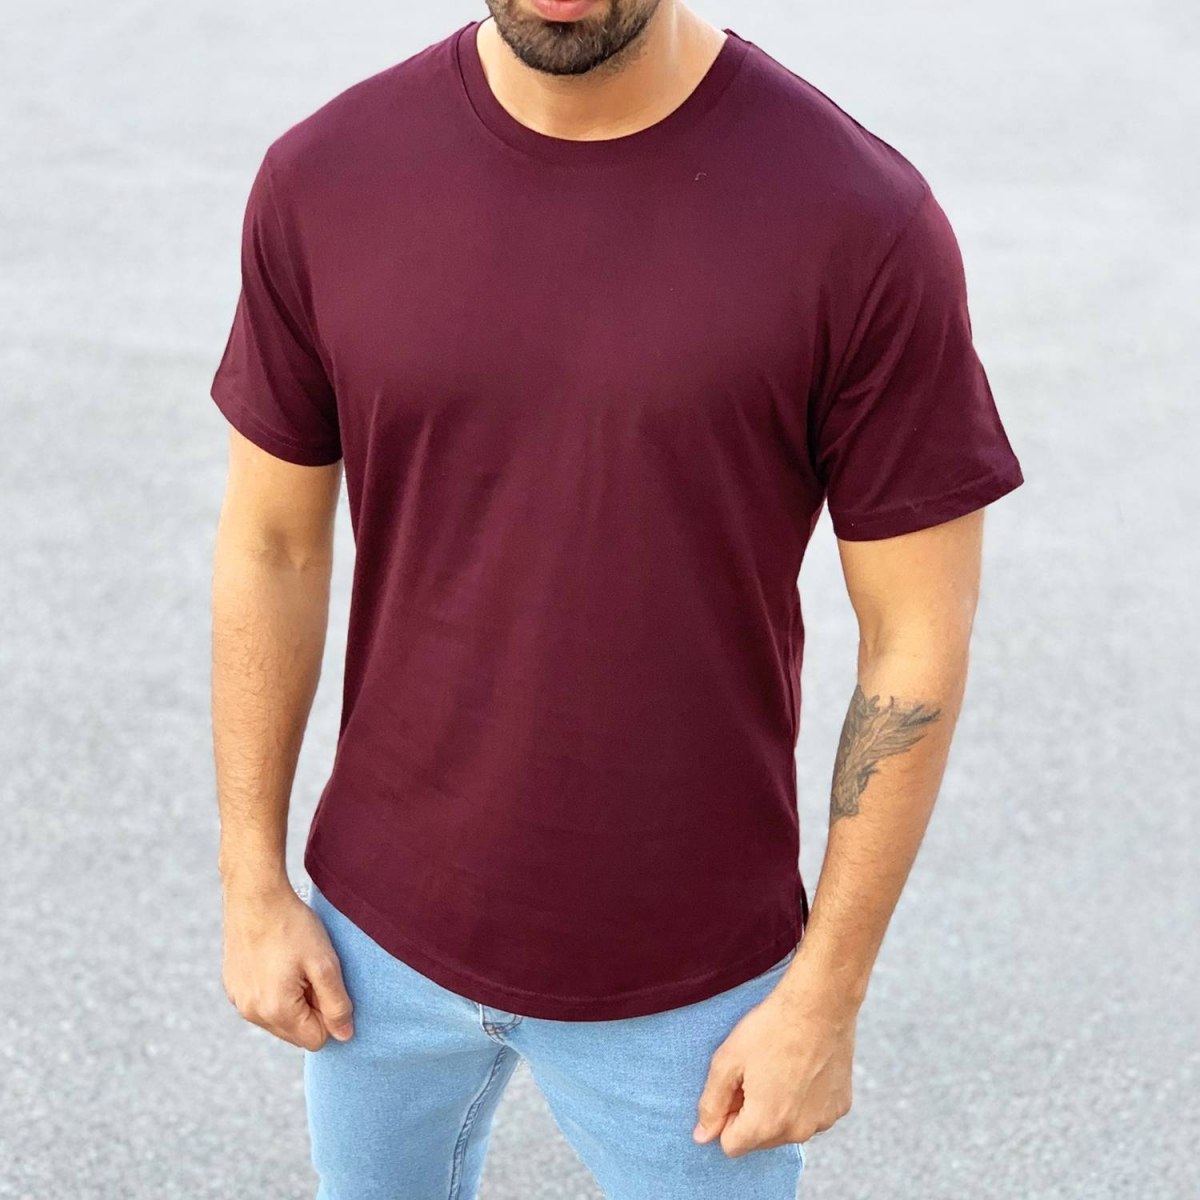 Men's Basic Round Neck T-Shirt In Claret Red - 1